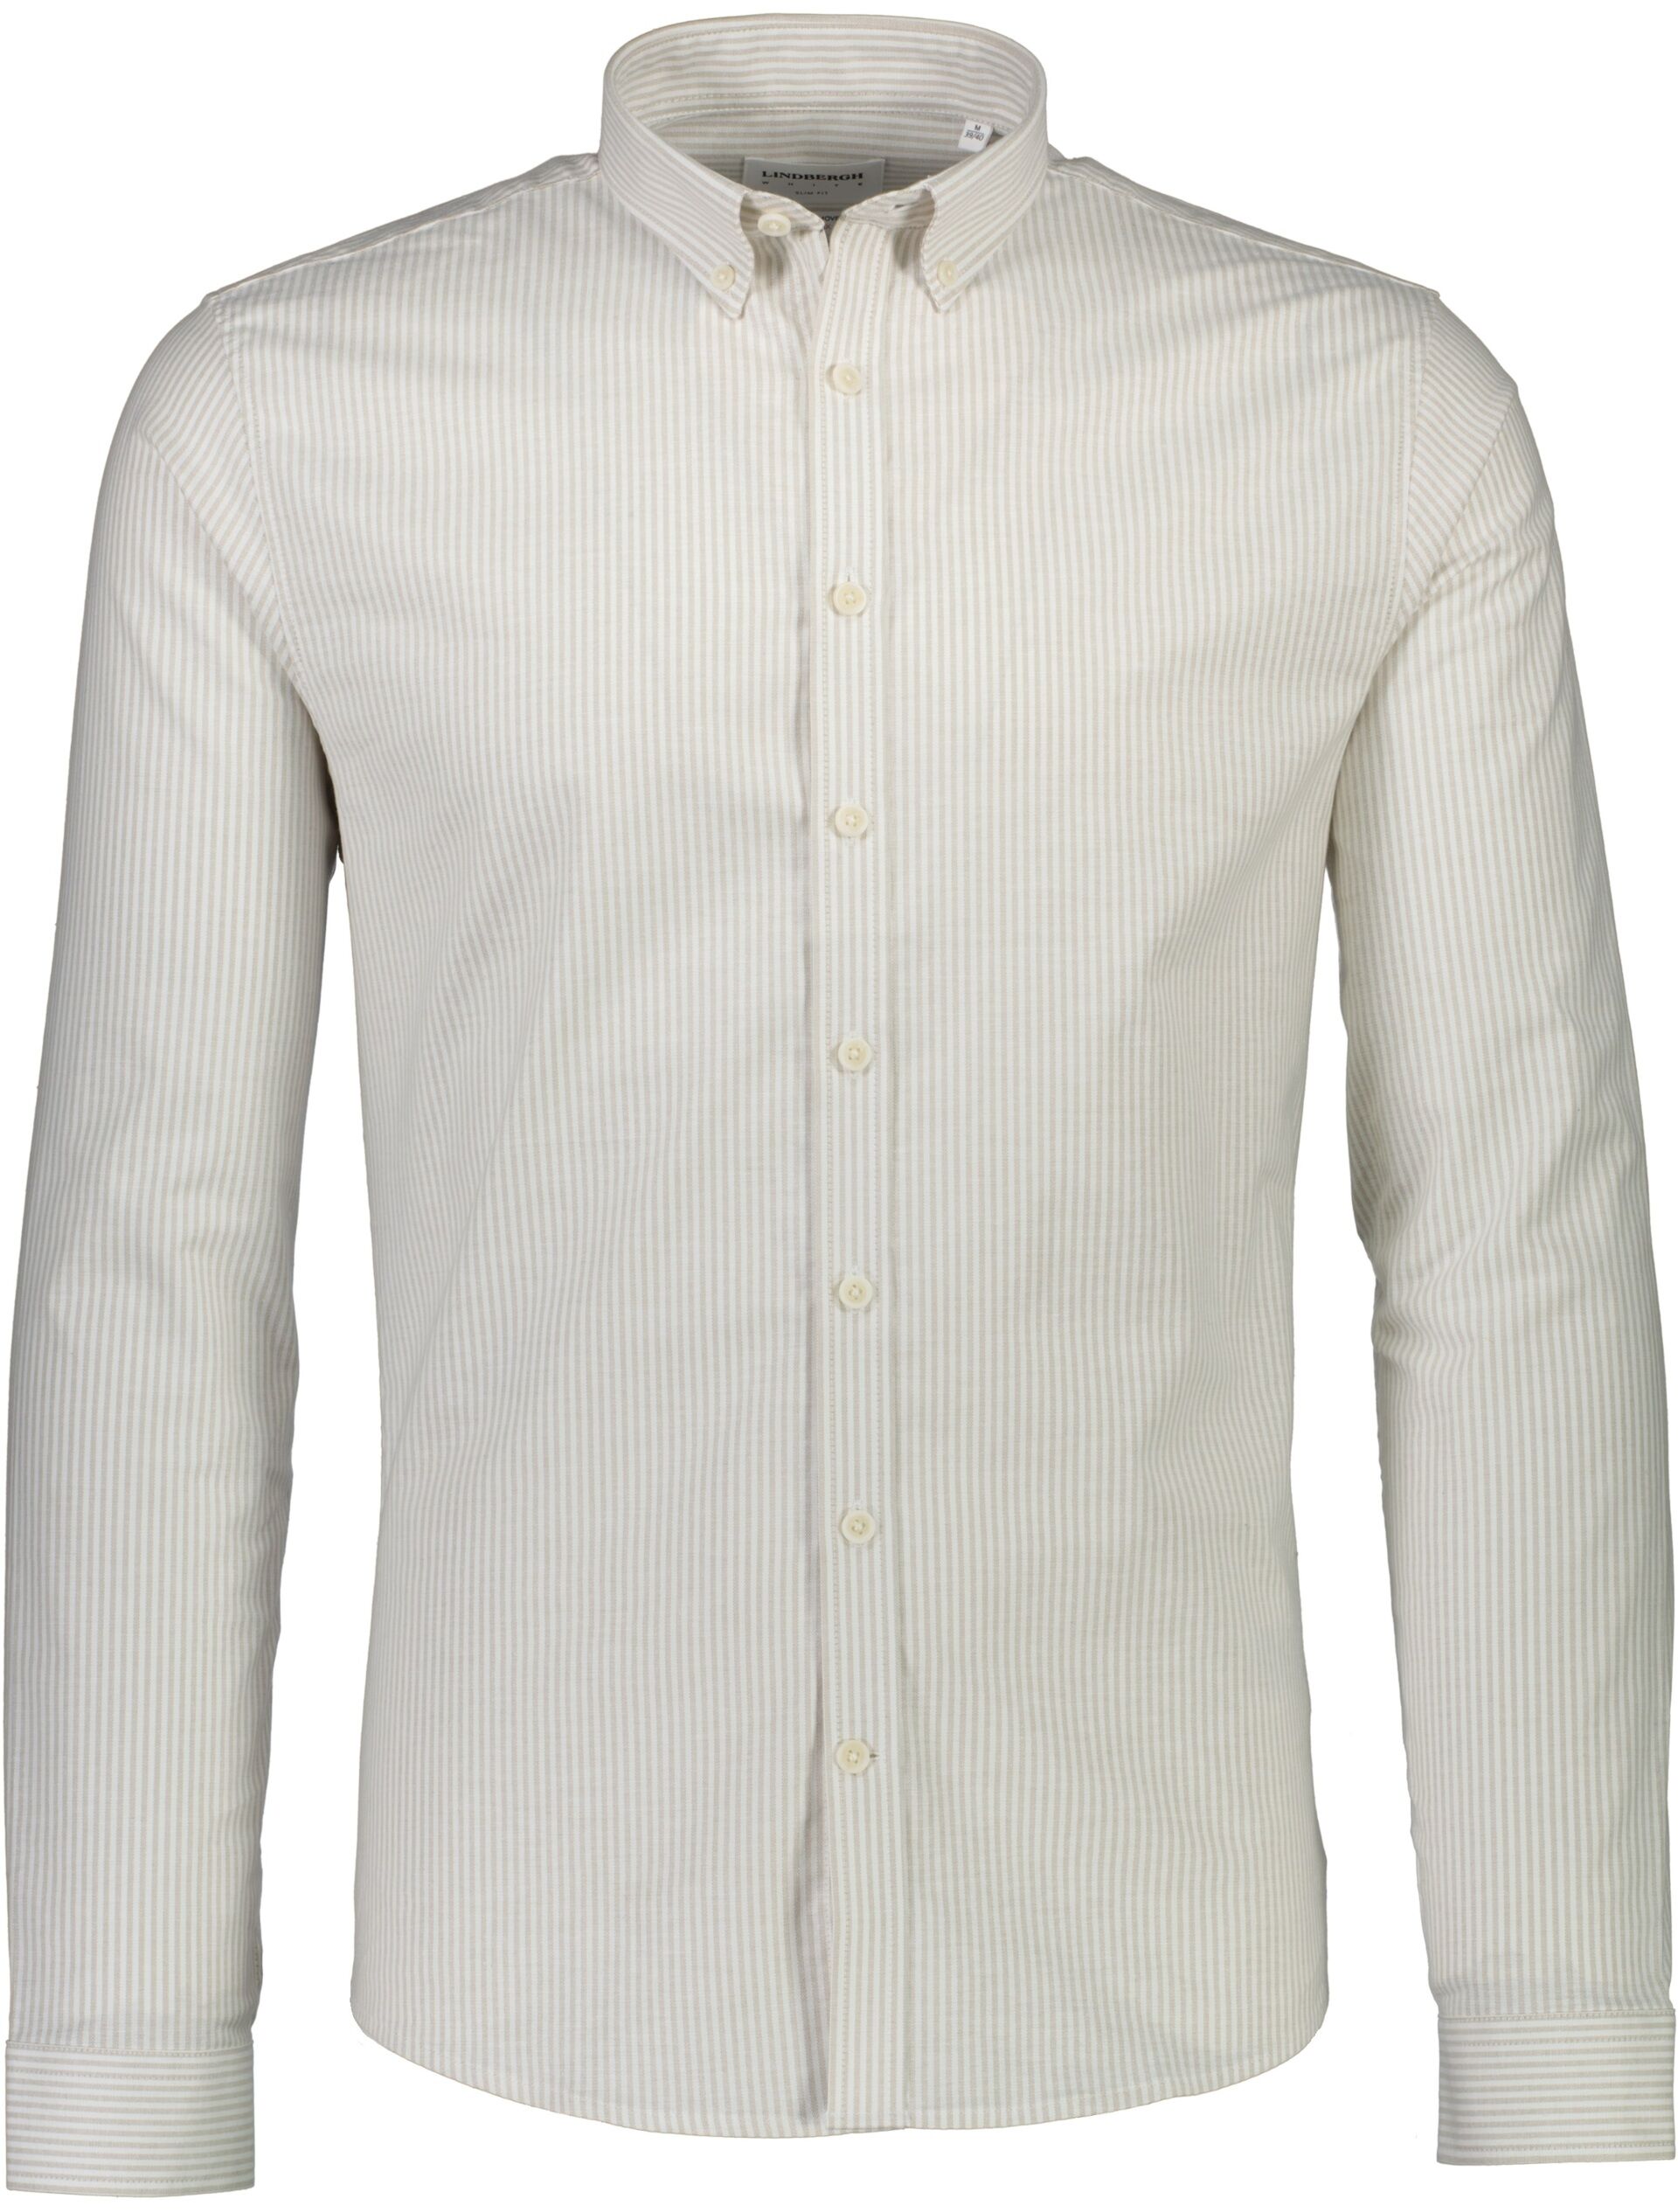 Oxford shirt 30-203296